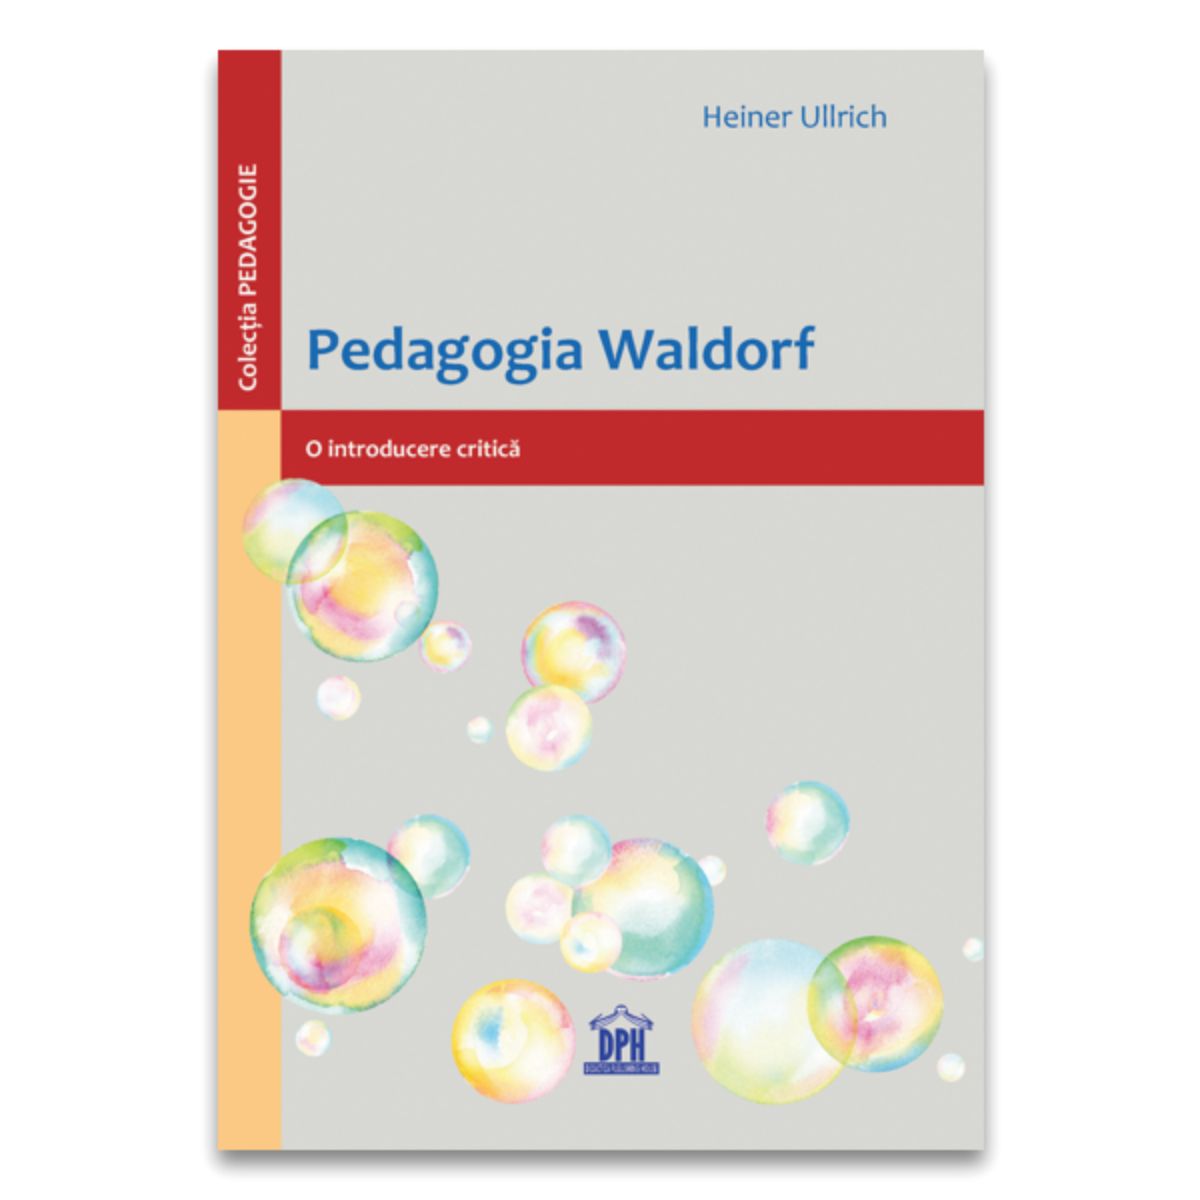 Pedagogia Waldorf, O introducere critica, Heiner Ullrich